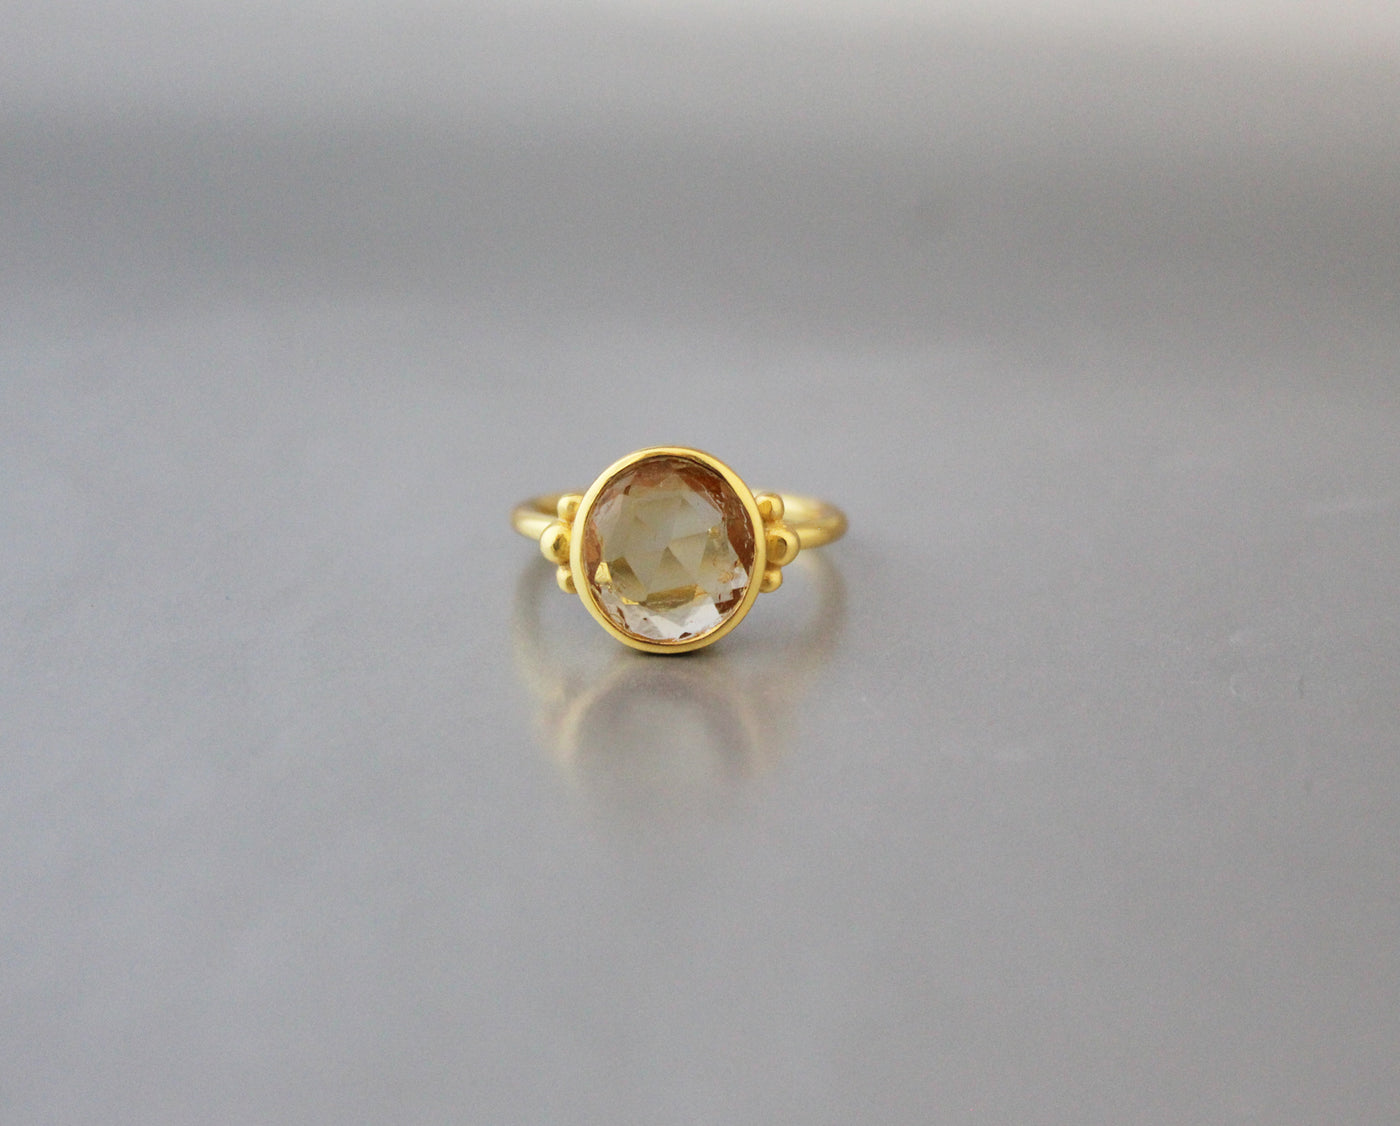 Natural Citrine Ring, November Birthstone, Stacking Ring, Delicate Ring, Yellow Stone Ring, Simple Ring, Designer Ring, 18K Gold Filled Ring